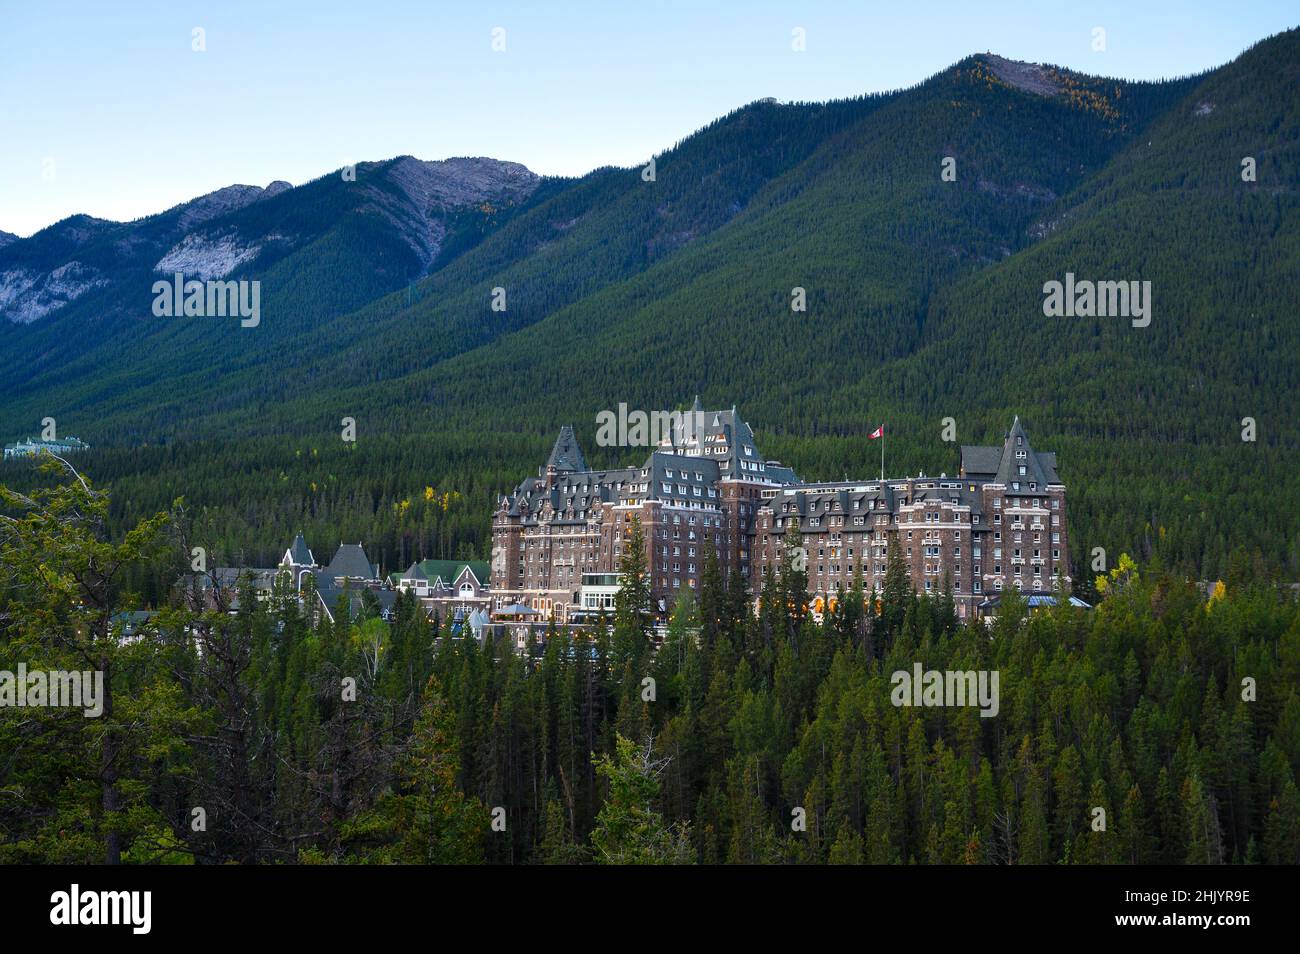 Fairmont Banff Springs Hotel in Rocky Mounatins, Canada Stock Photo